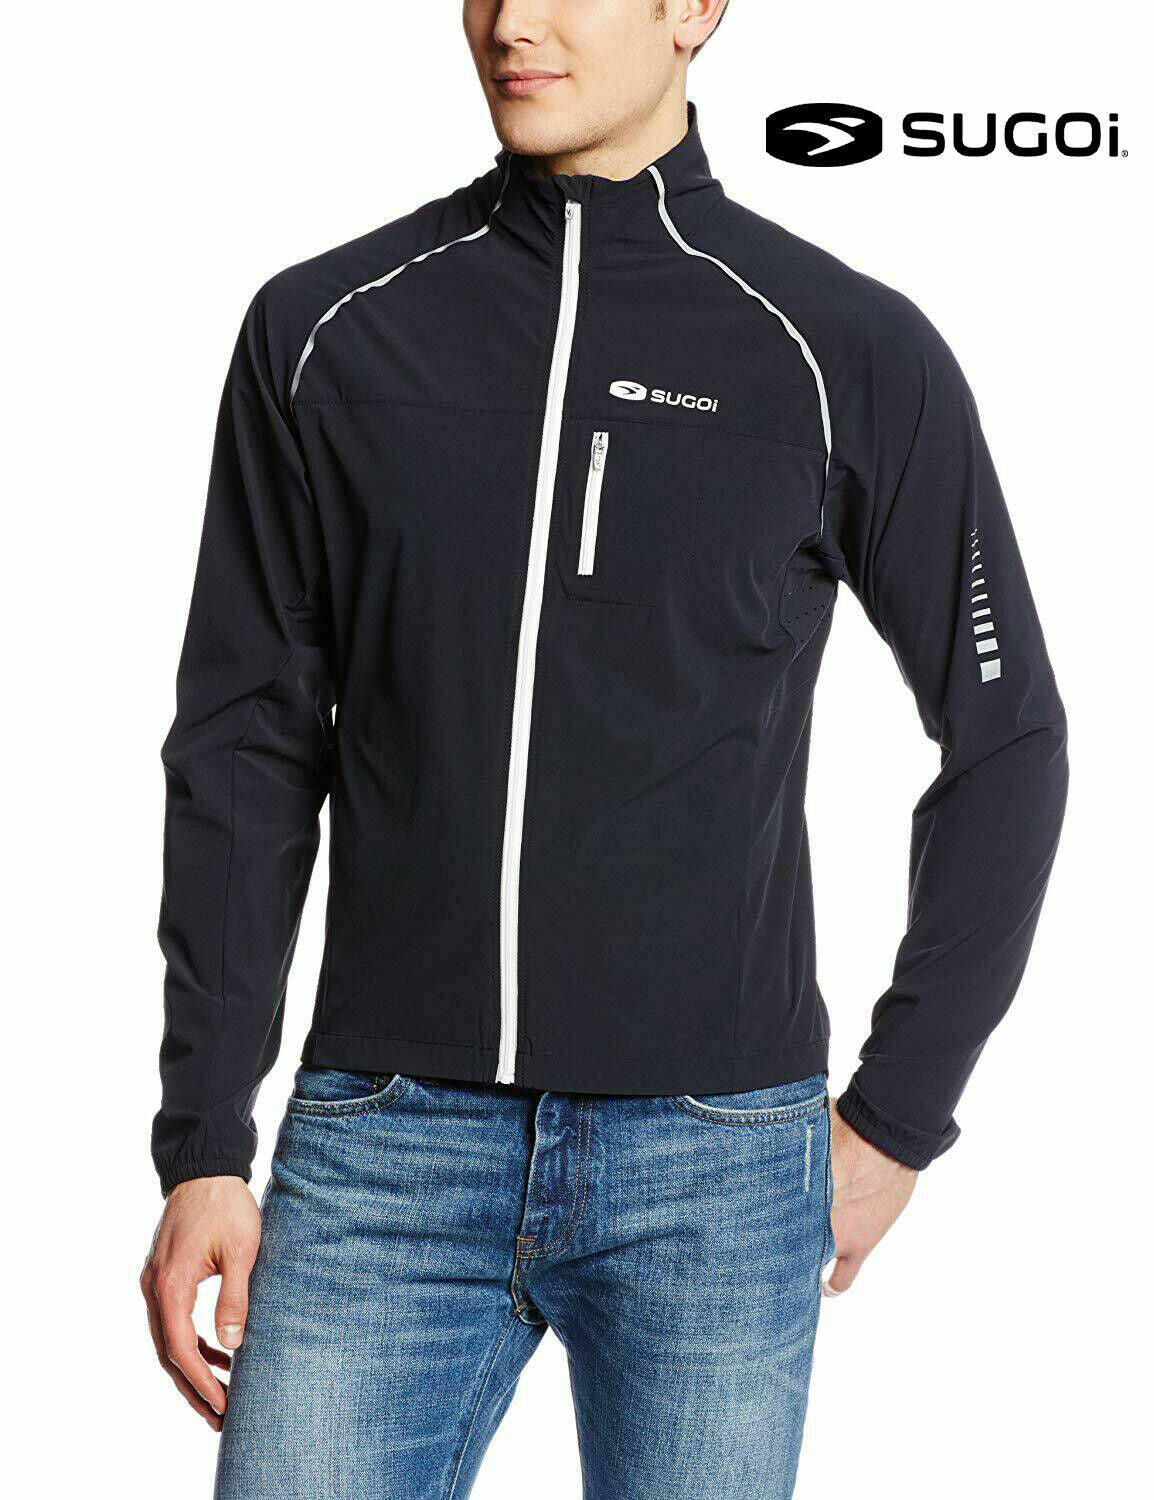 Nalini Pro Mesa Windproof Summer Cycling Jacket - RRP £79.99